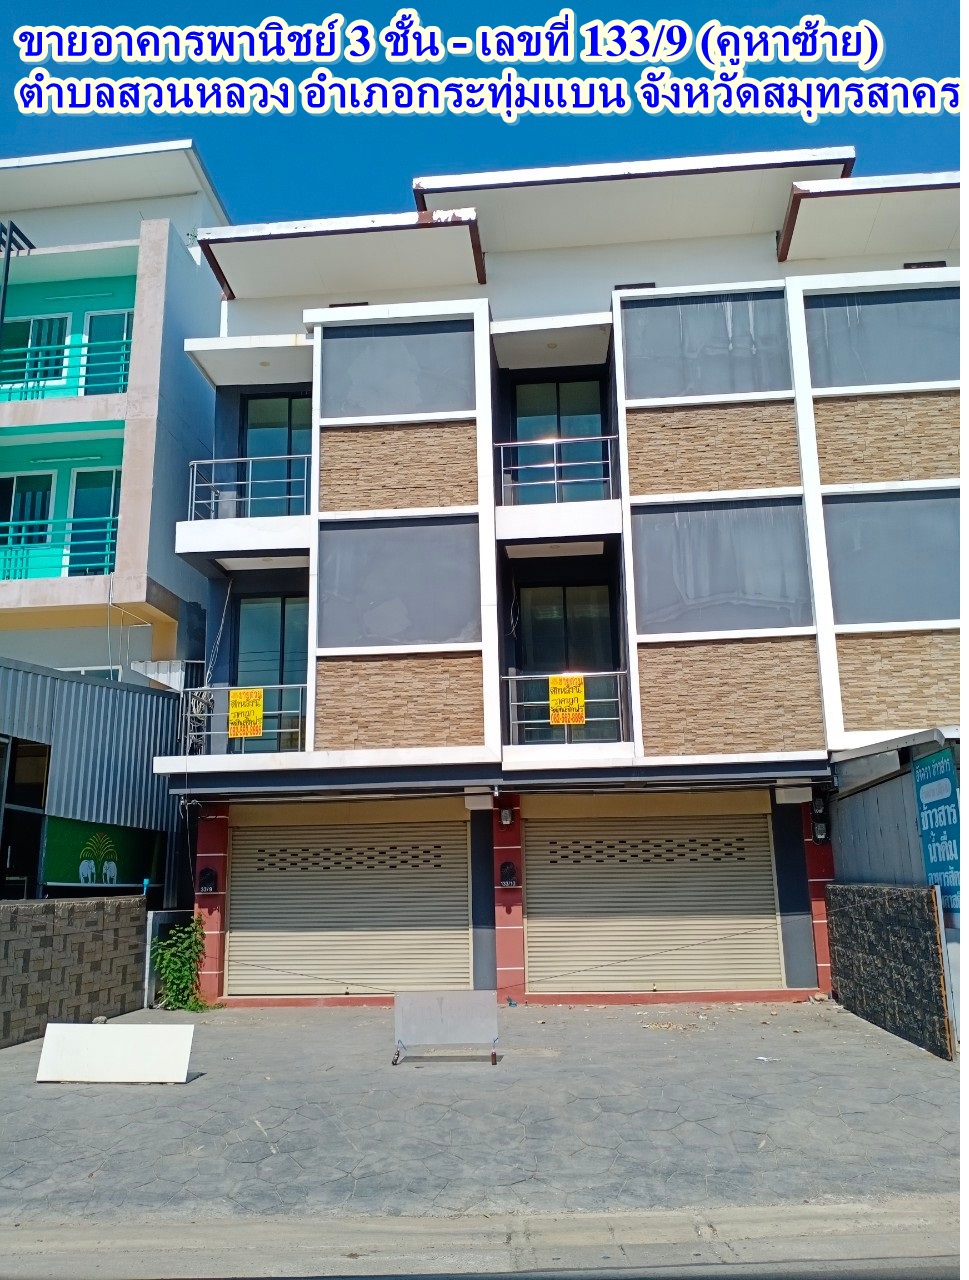 3-storey commercial building for sale (left booth), Suan Luang Subdistrict, Krathum Baen District Samut Sakhon Province